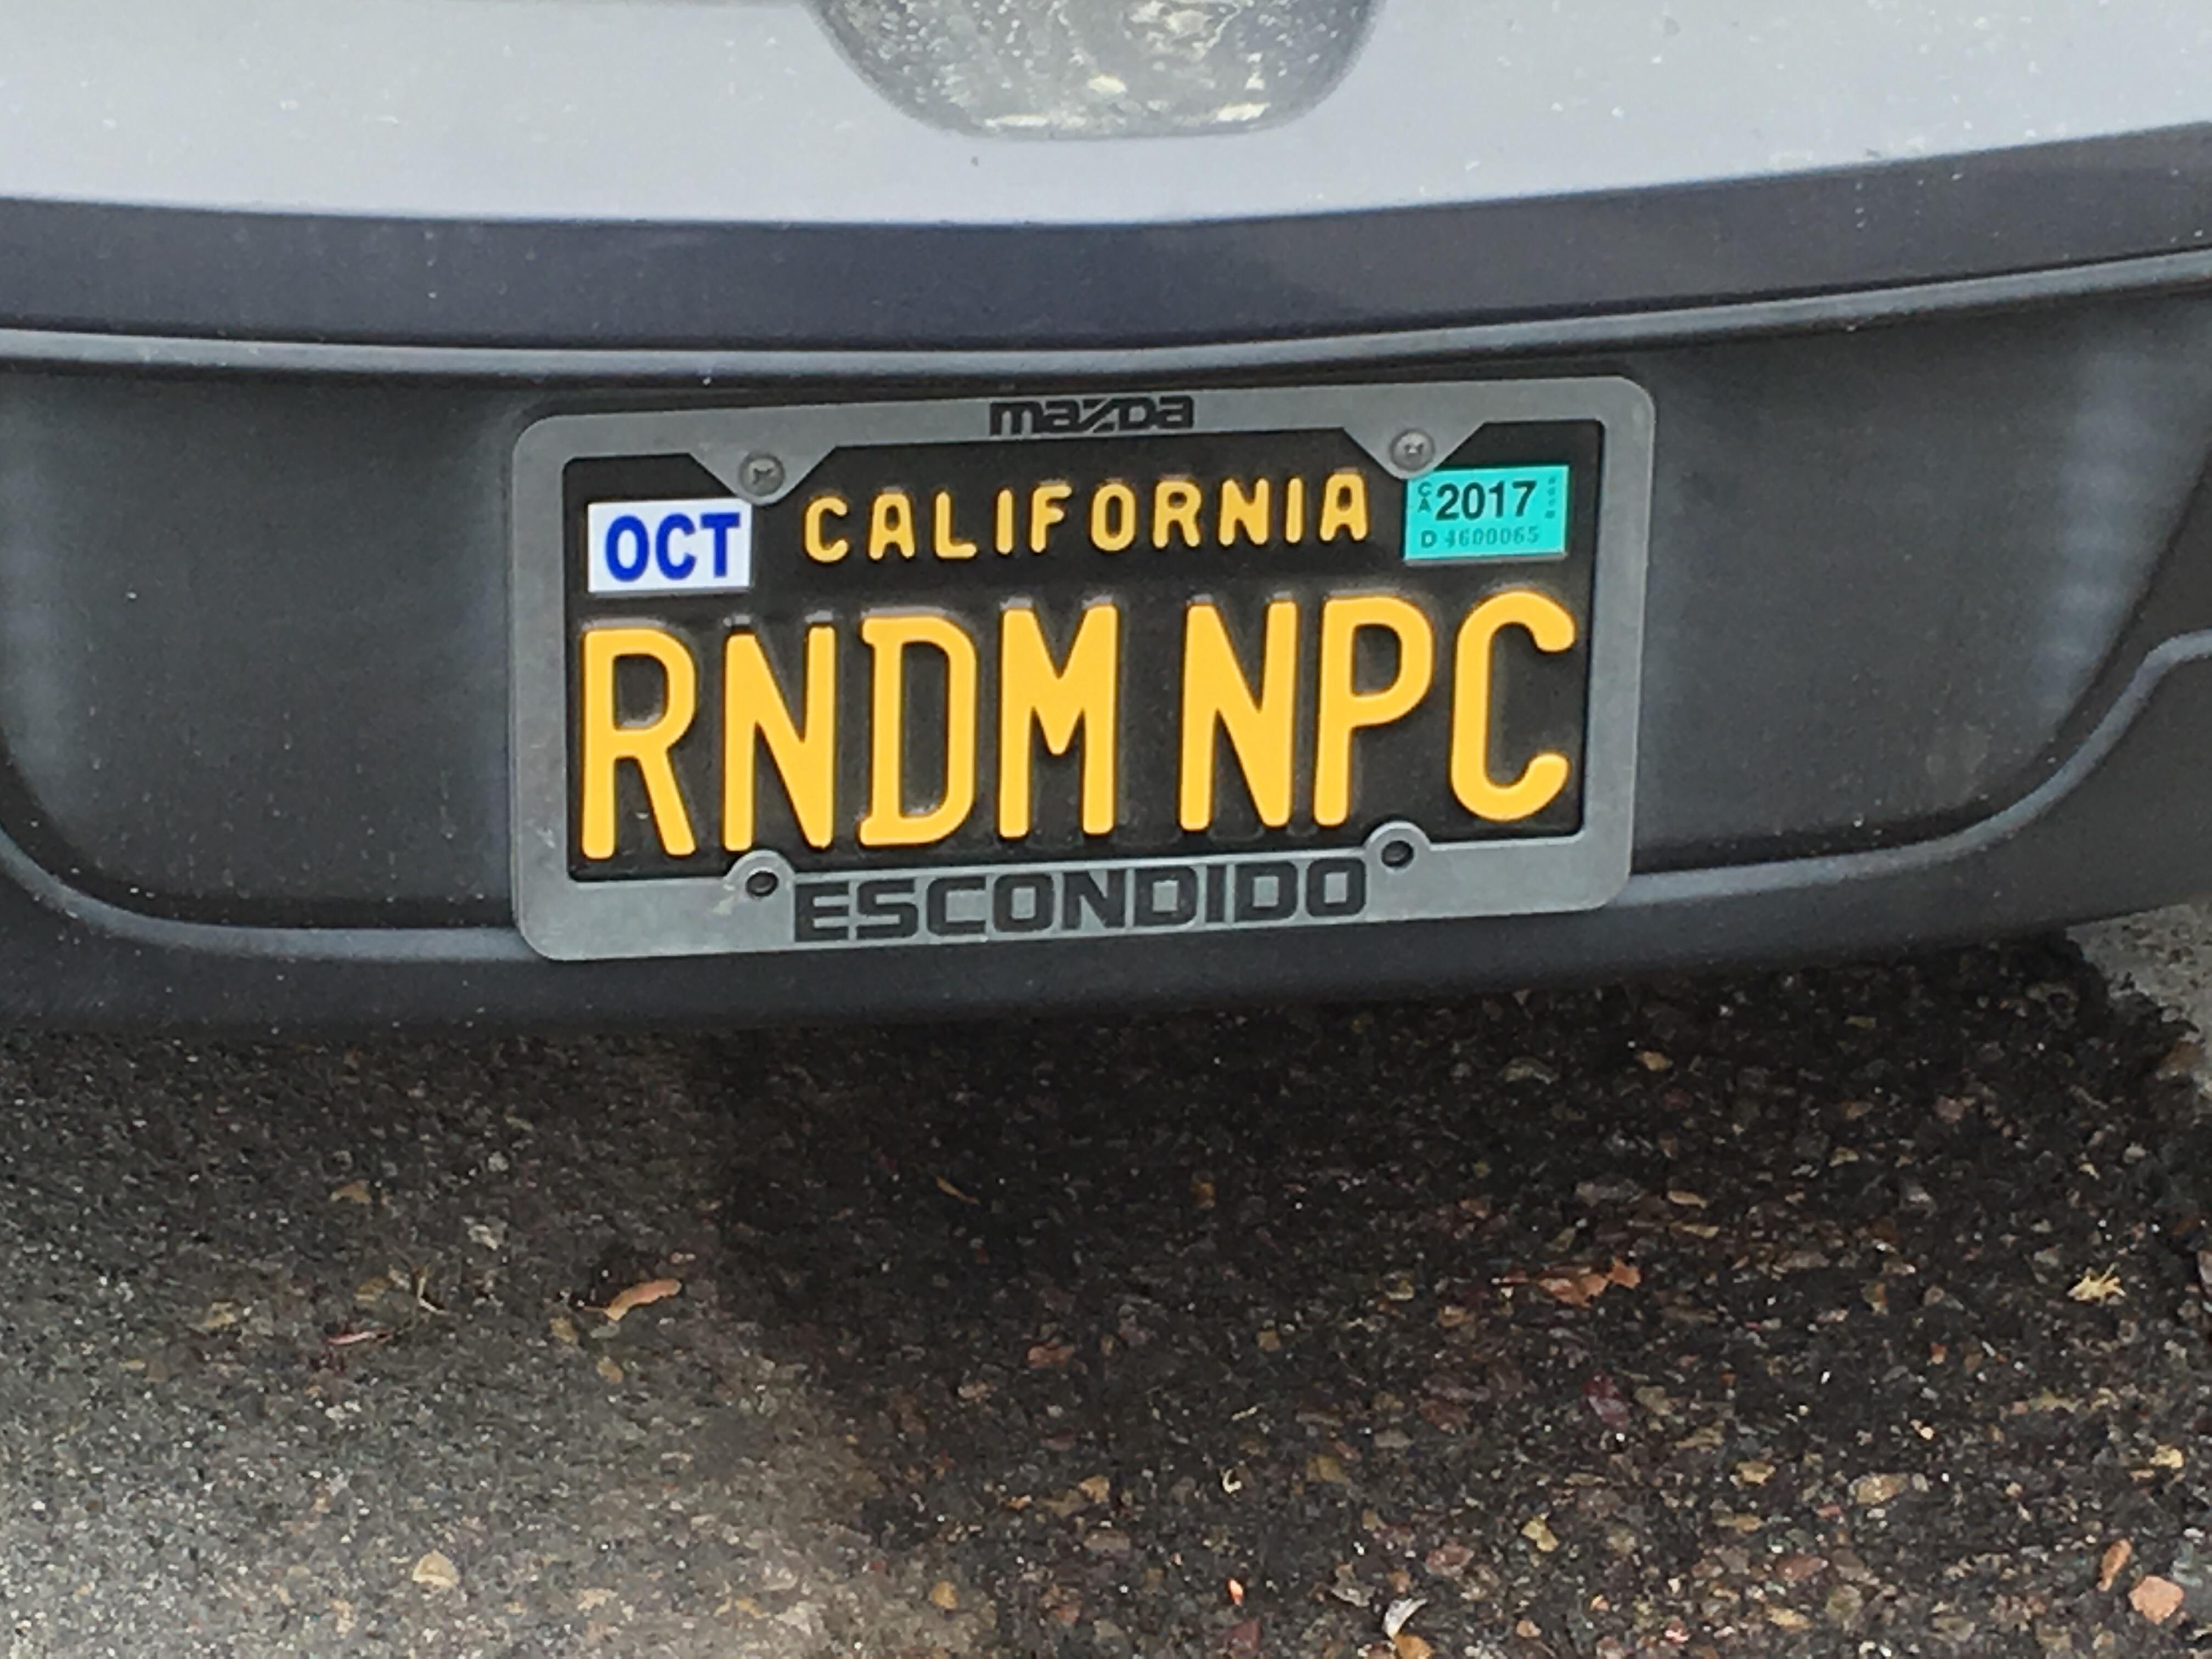 vehicle registration plate - mazda Oct California 2017 Rndm Npc Escondido